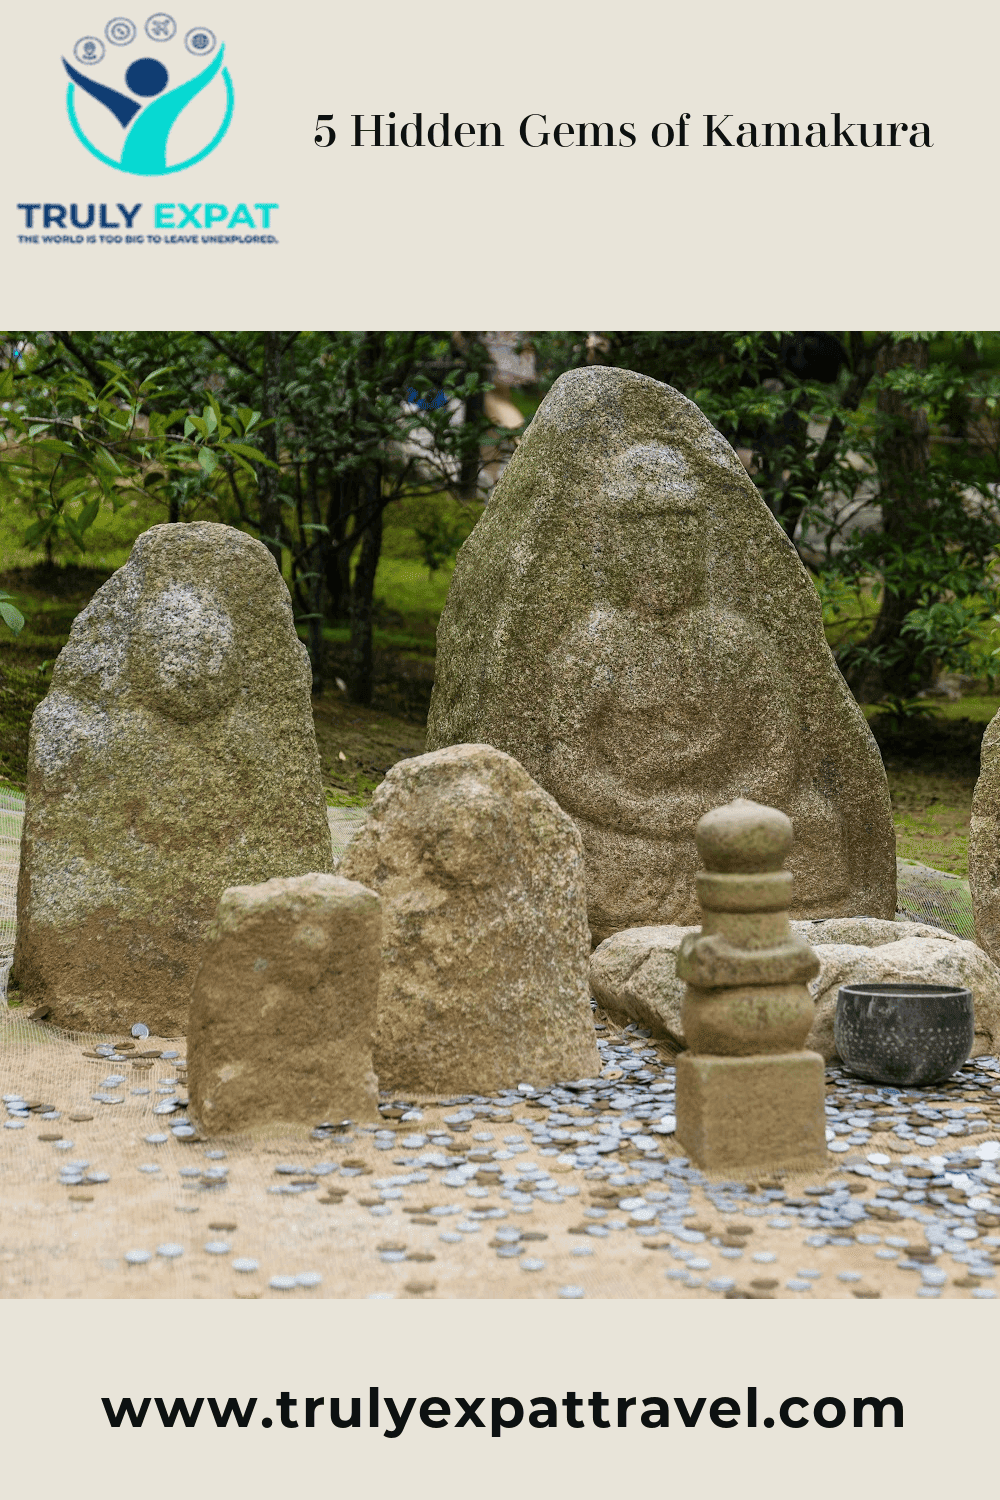 5 Hidden gems of Kamakura